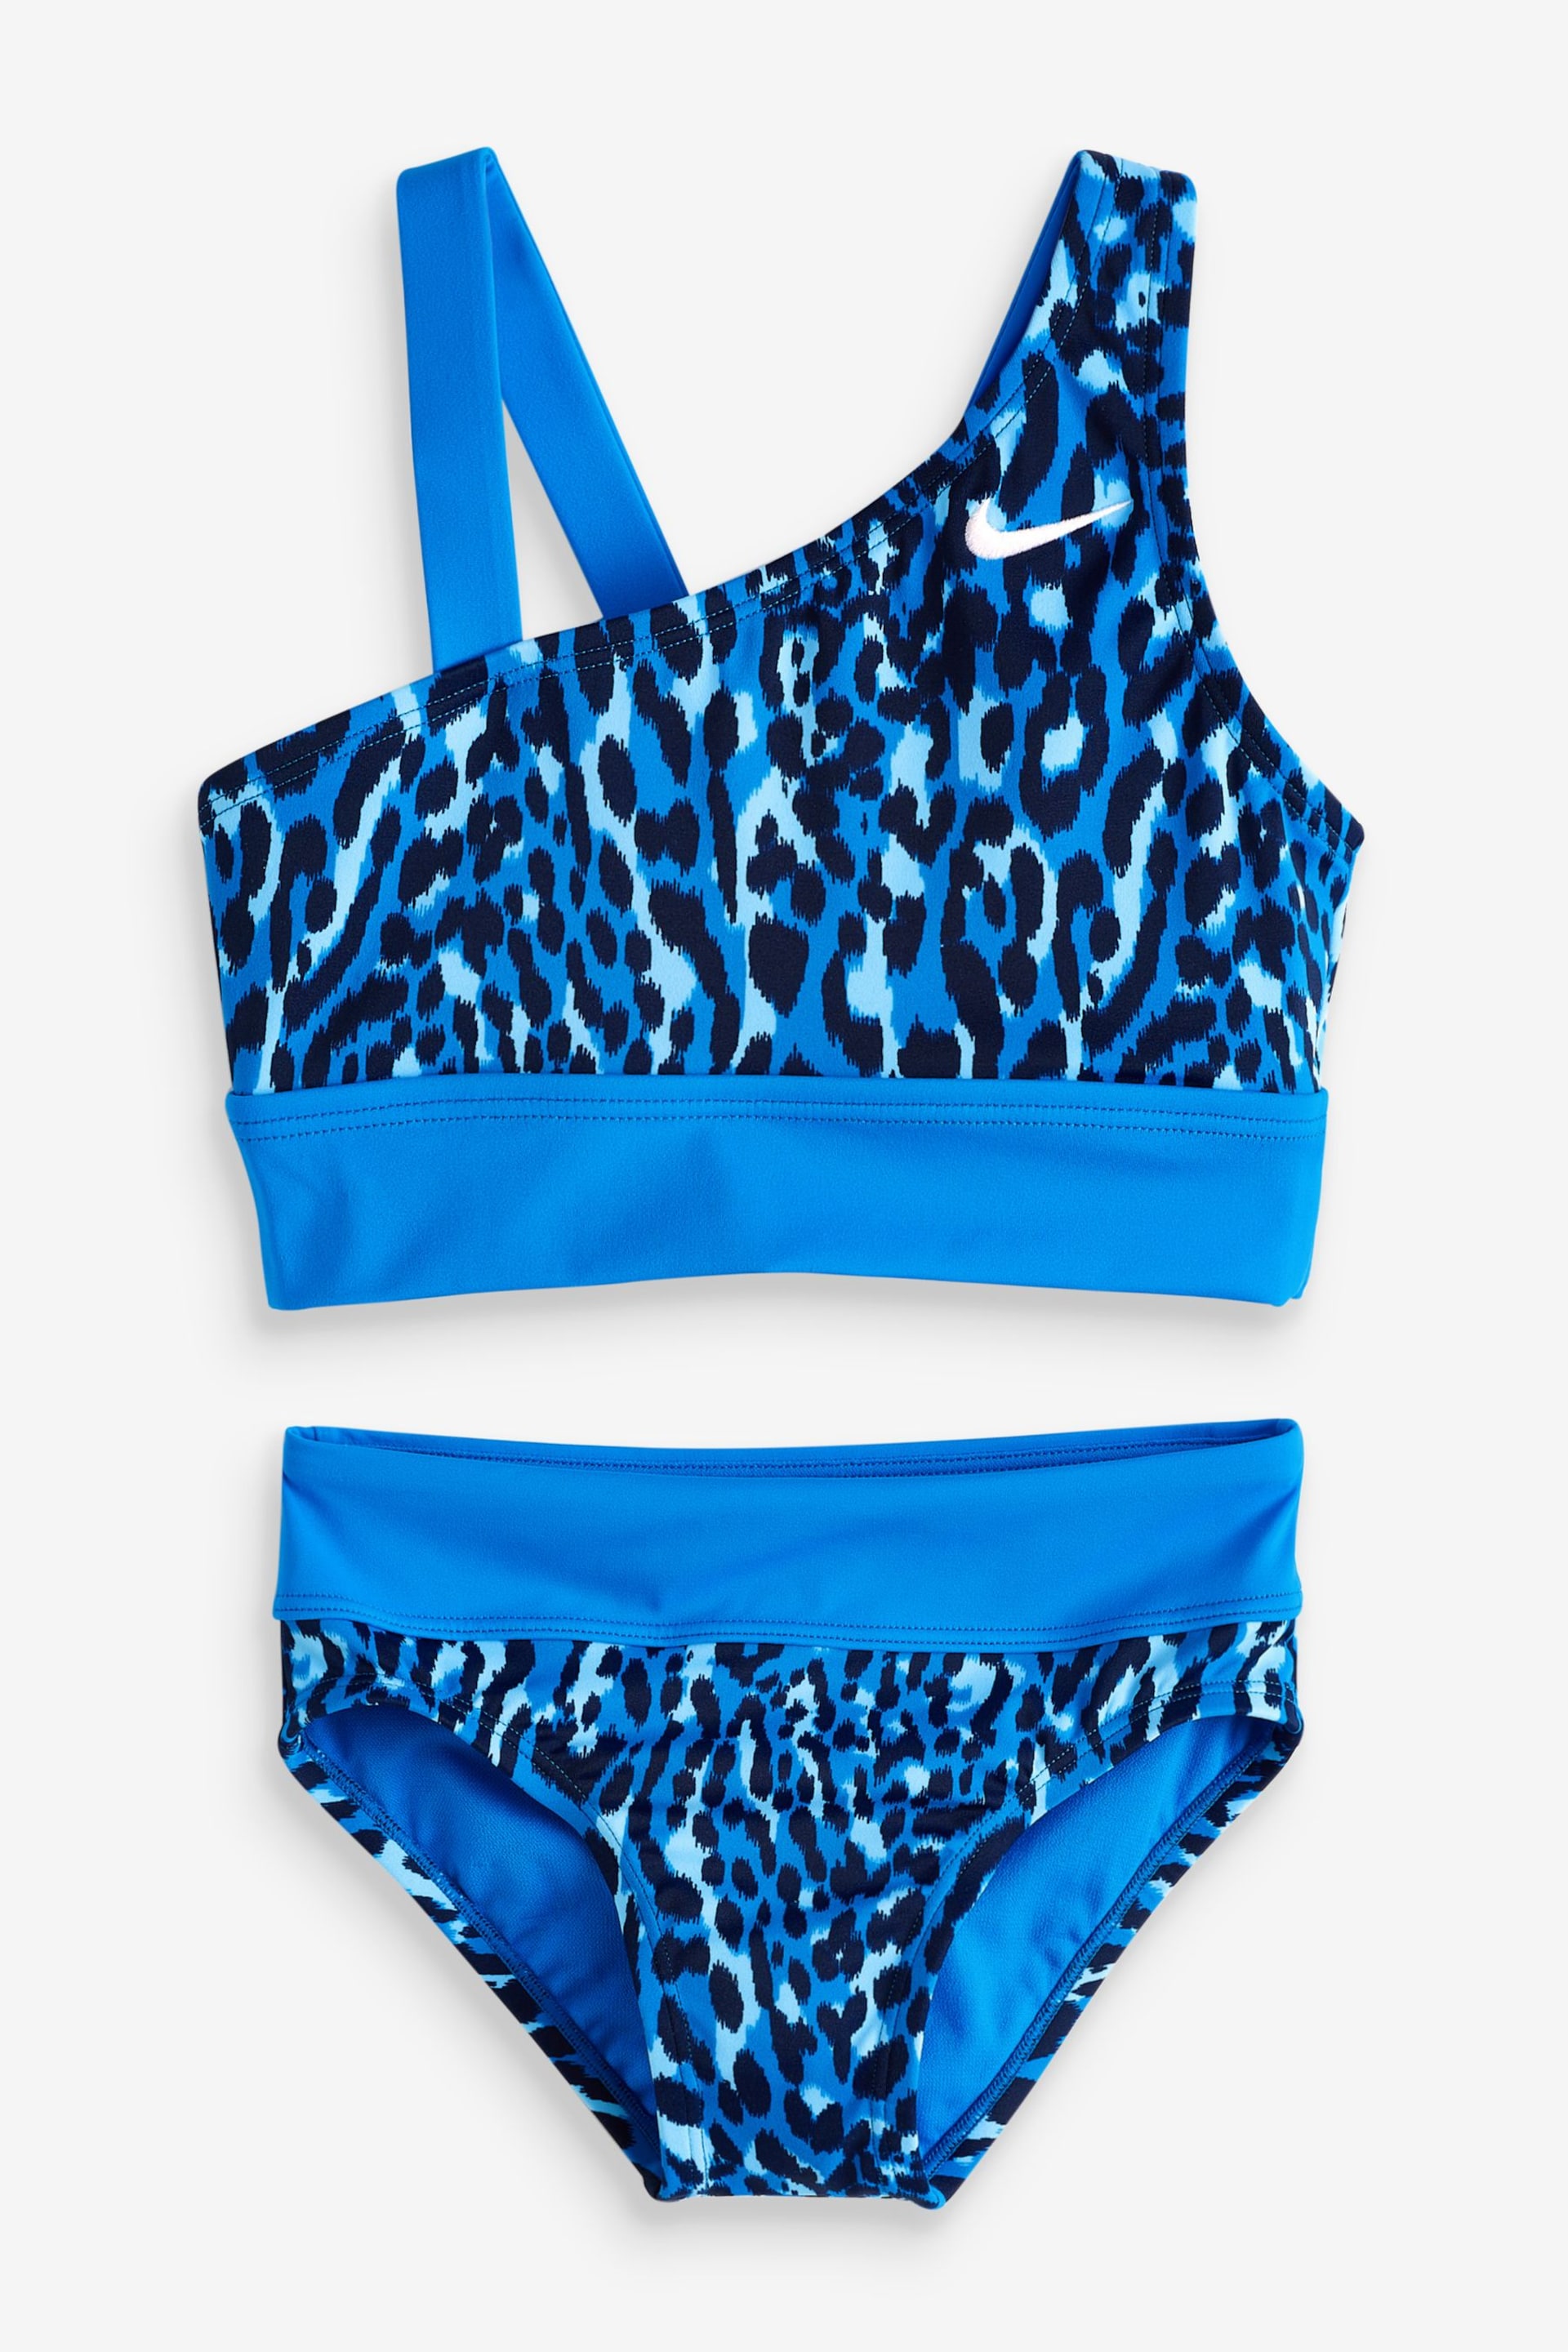 Nike Blue Animal Print Asymmetrical Top Bikini Set - Image 1 of 4